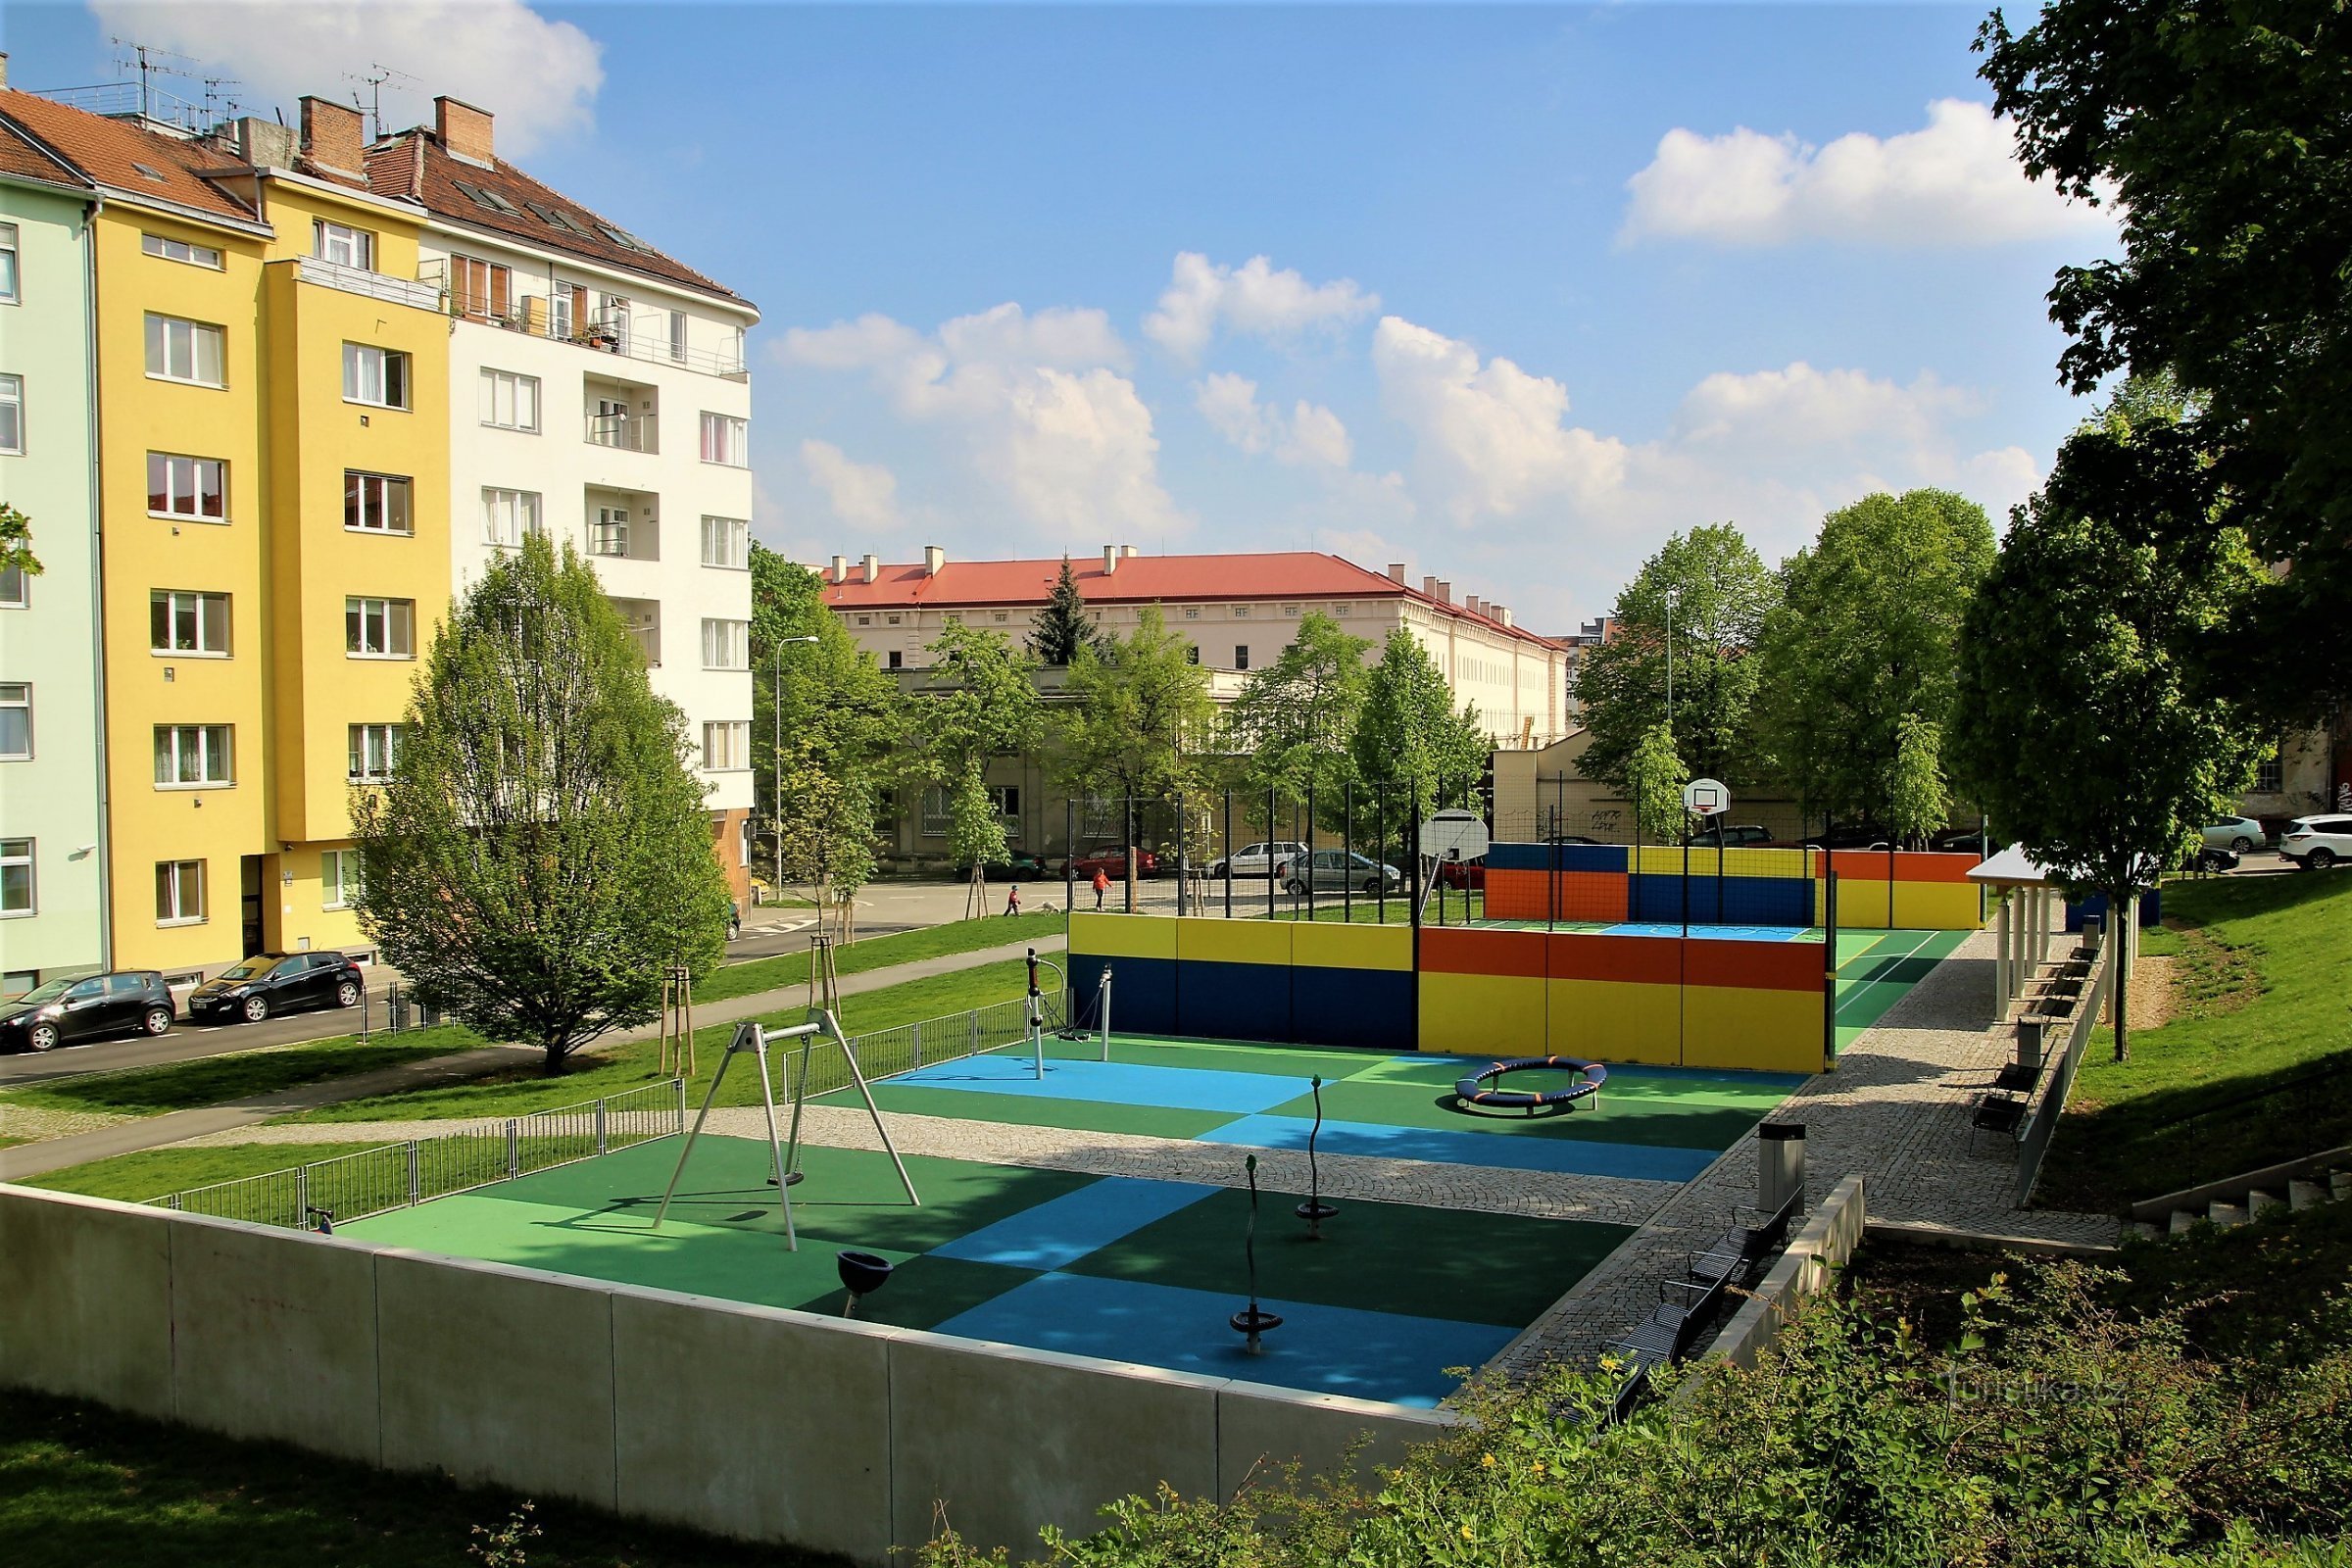 Brno - sports and recreation area on Kartouzské street